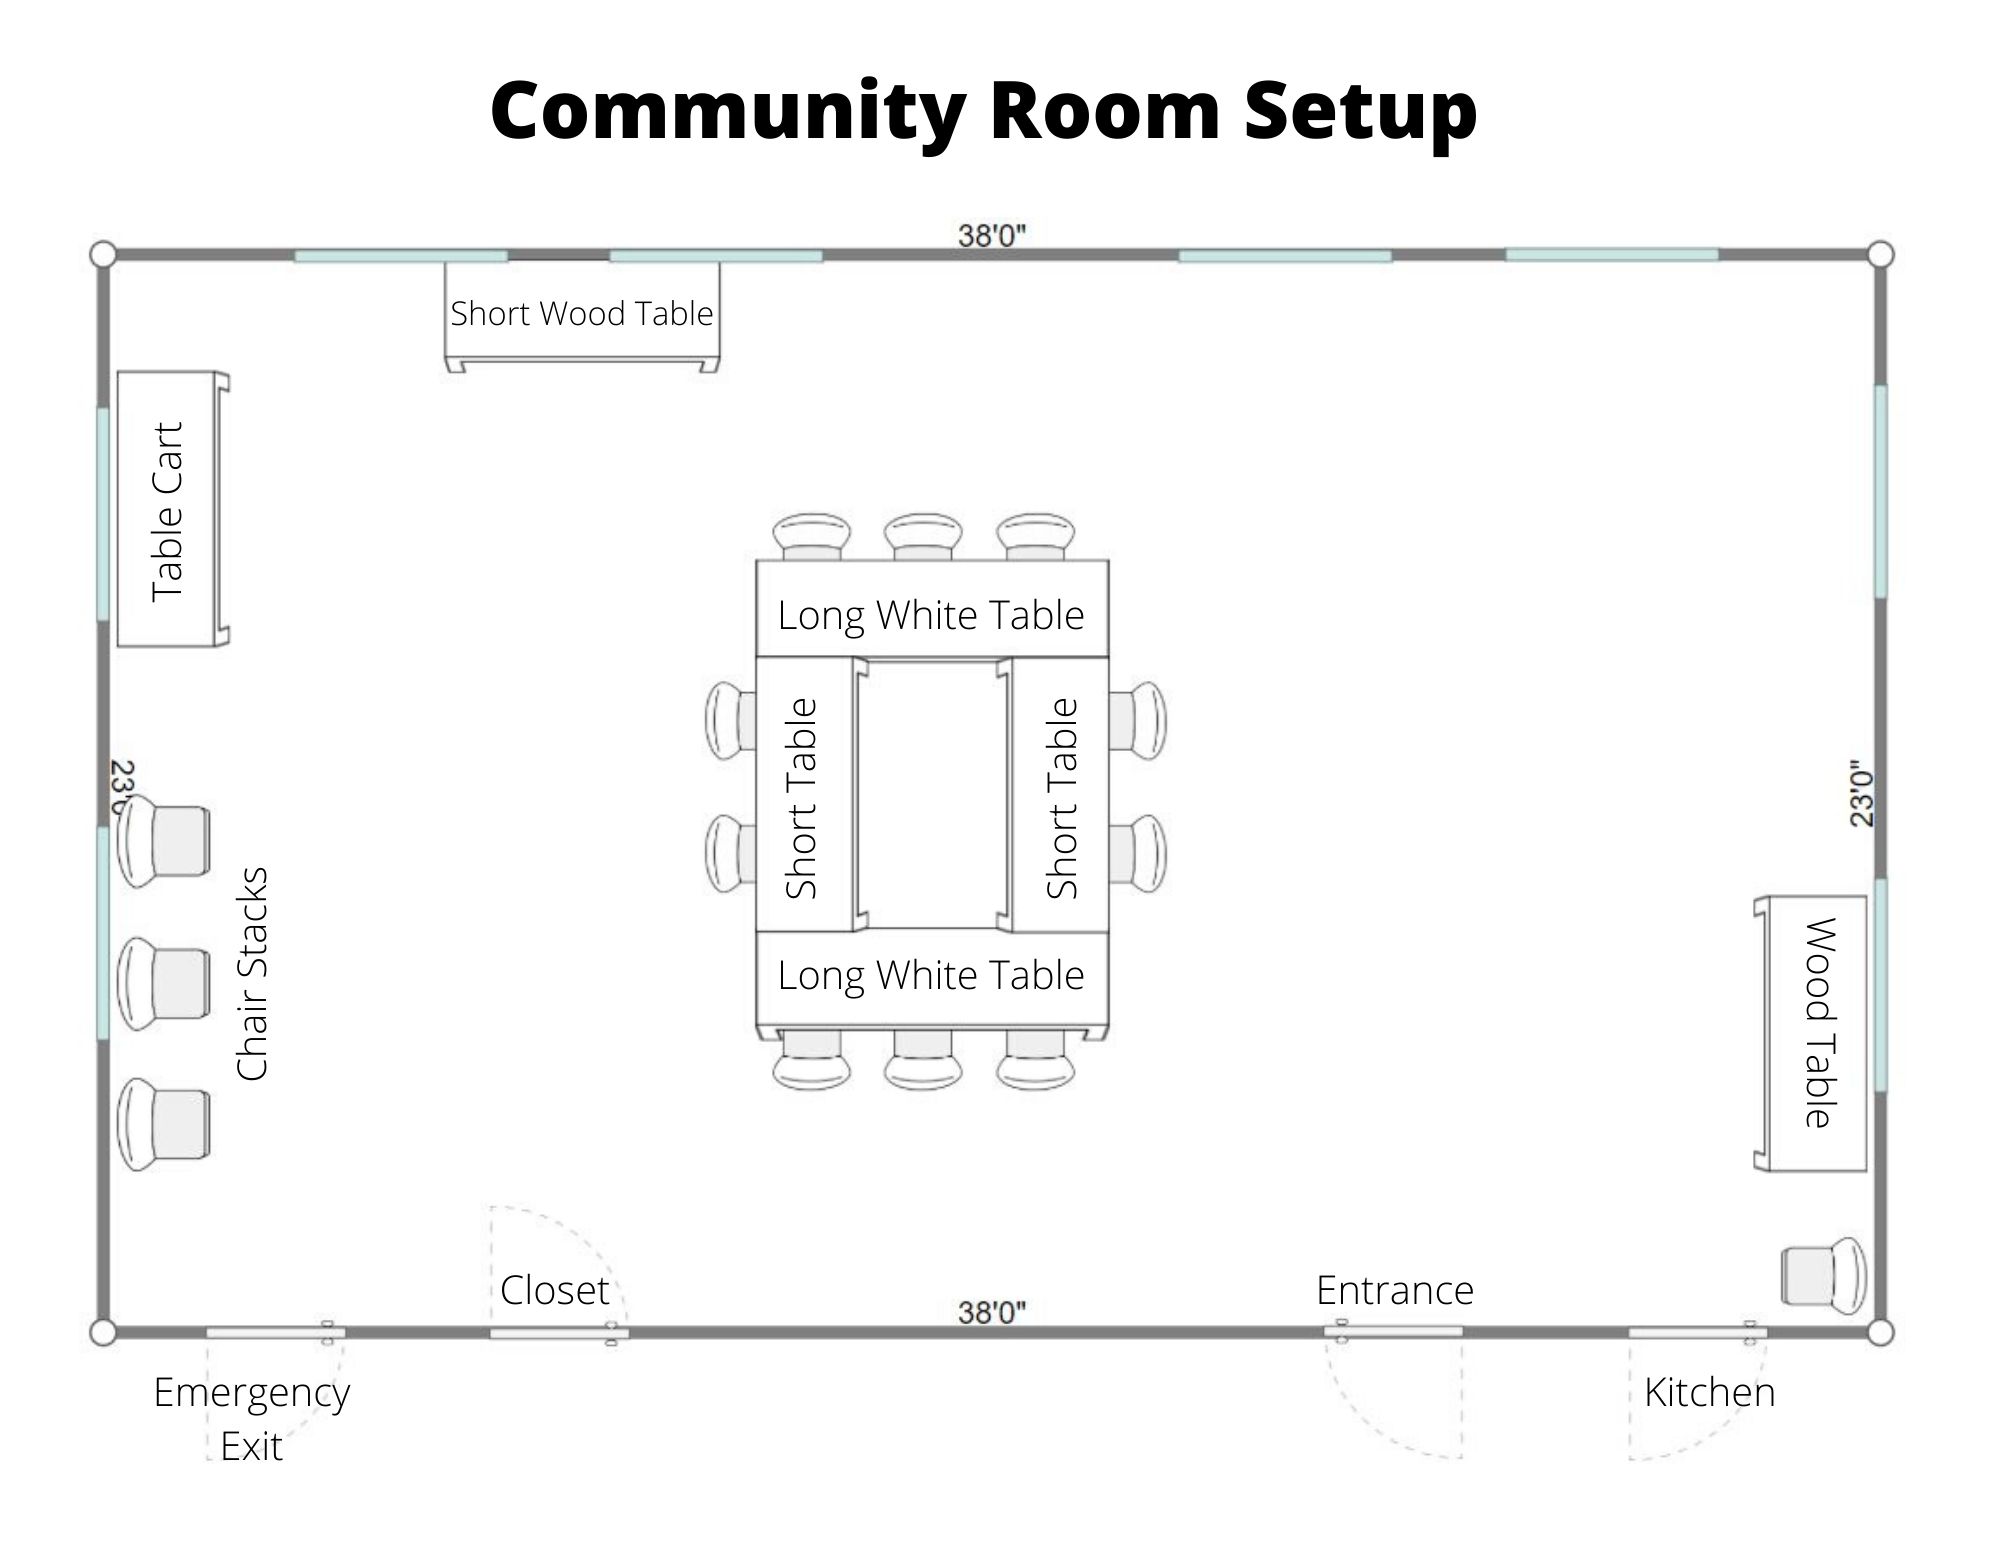 Community Room Setup Diagram